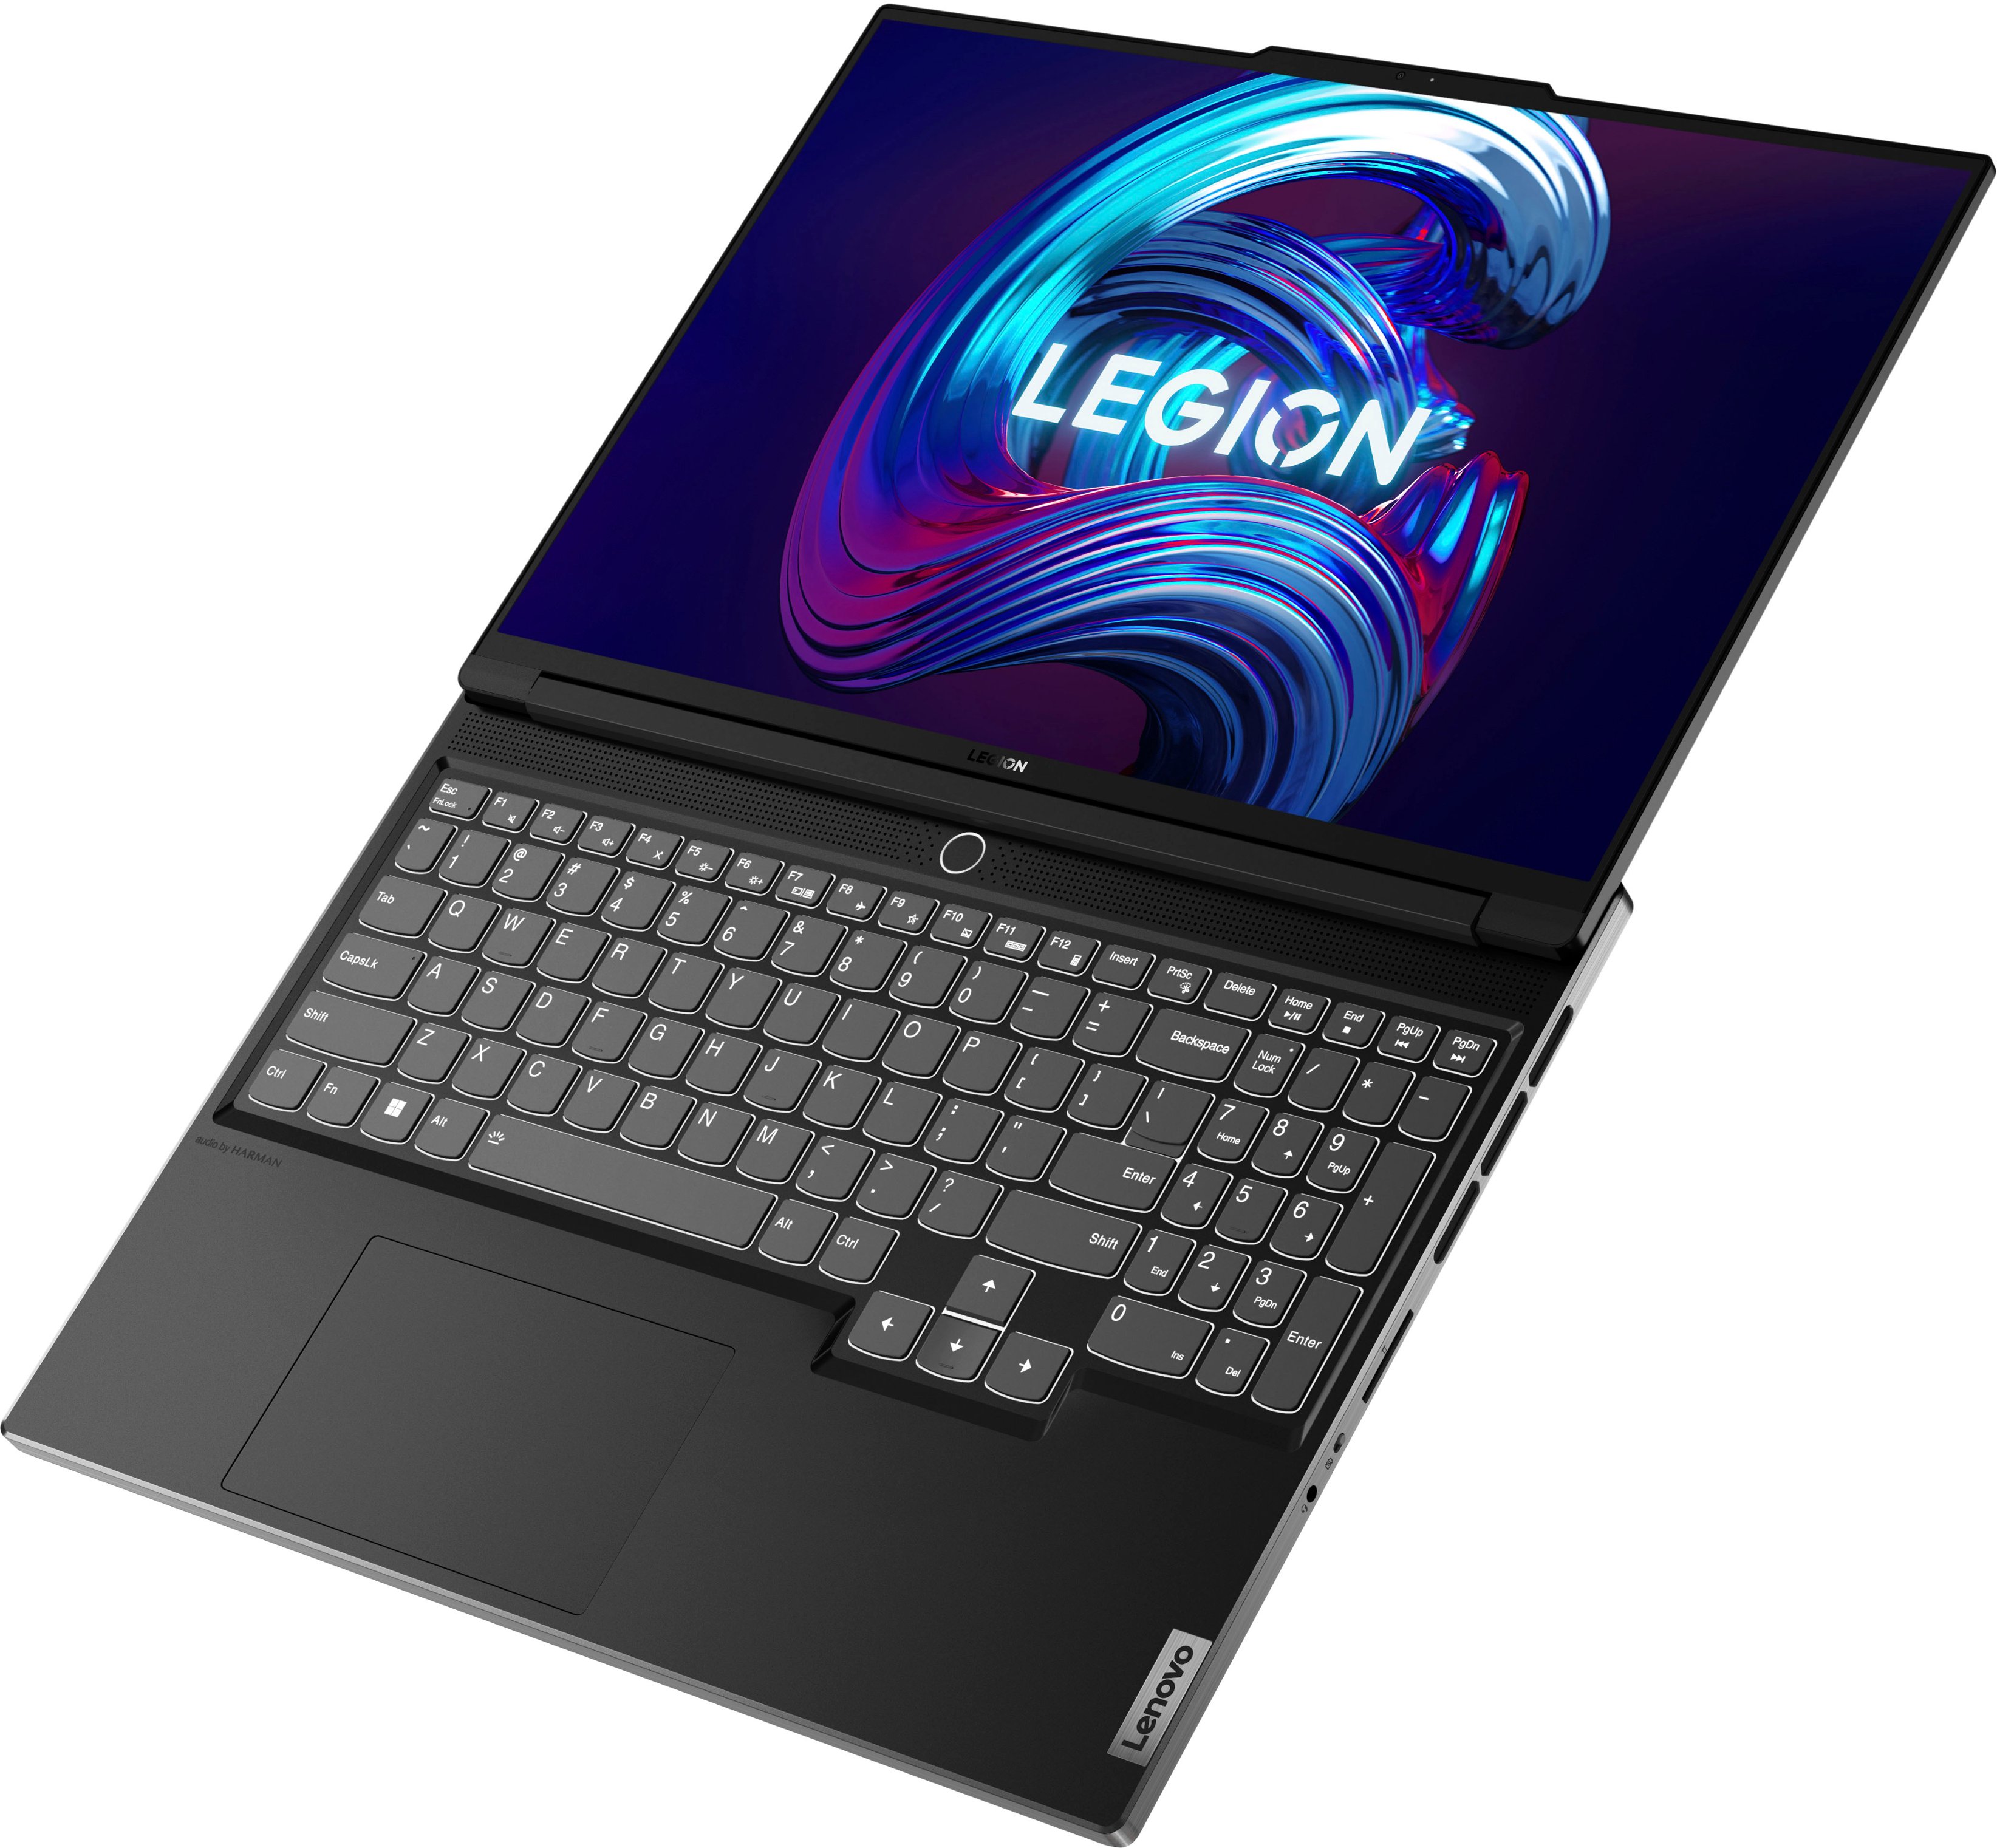 Lenovo Legion 7 Gen 7 (2022) Review (Ryzen 7 6800H, Radeon RX 6700M)